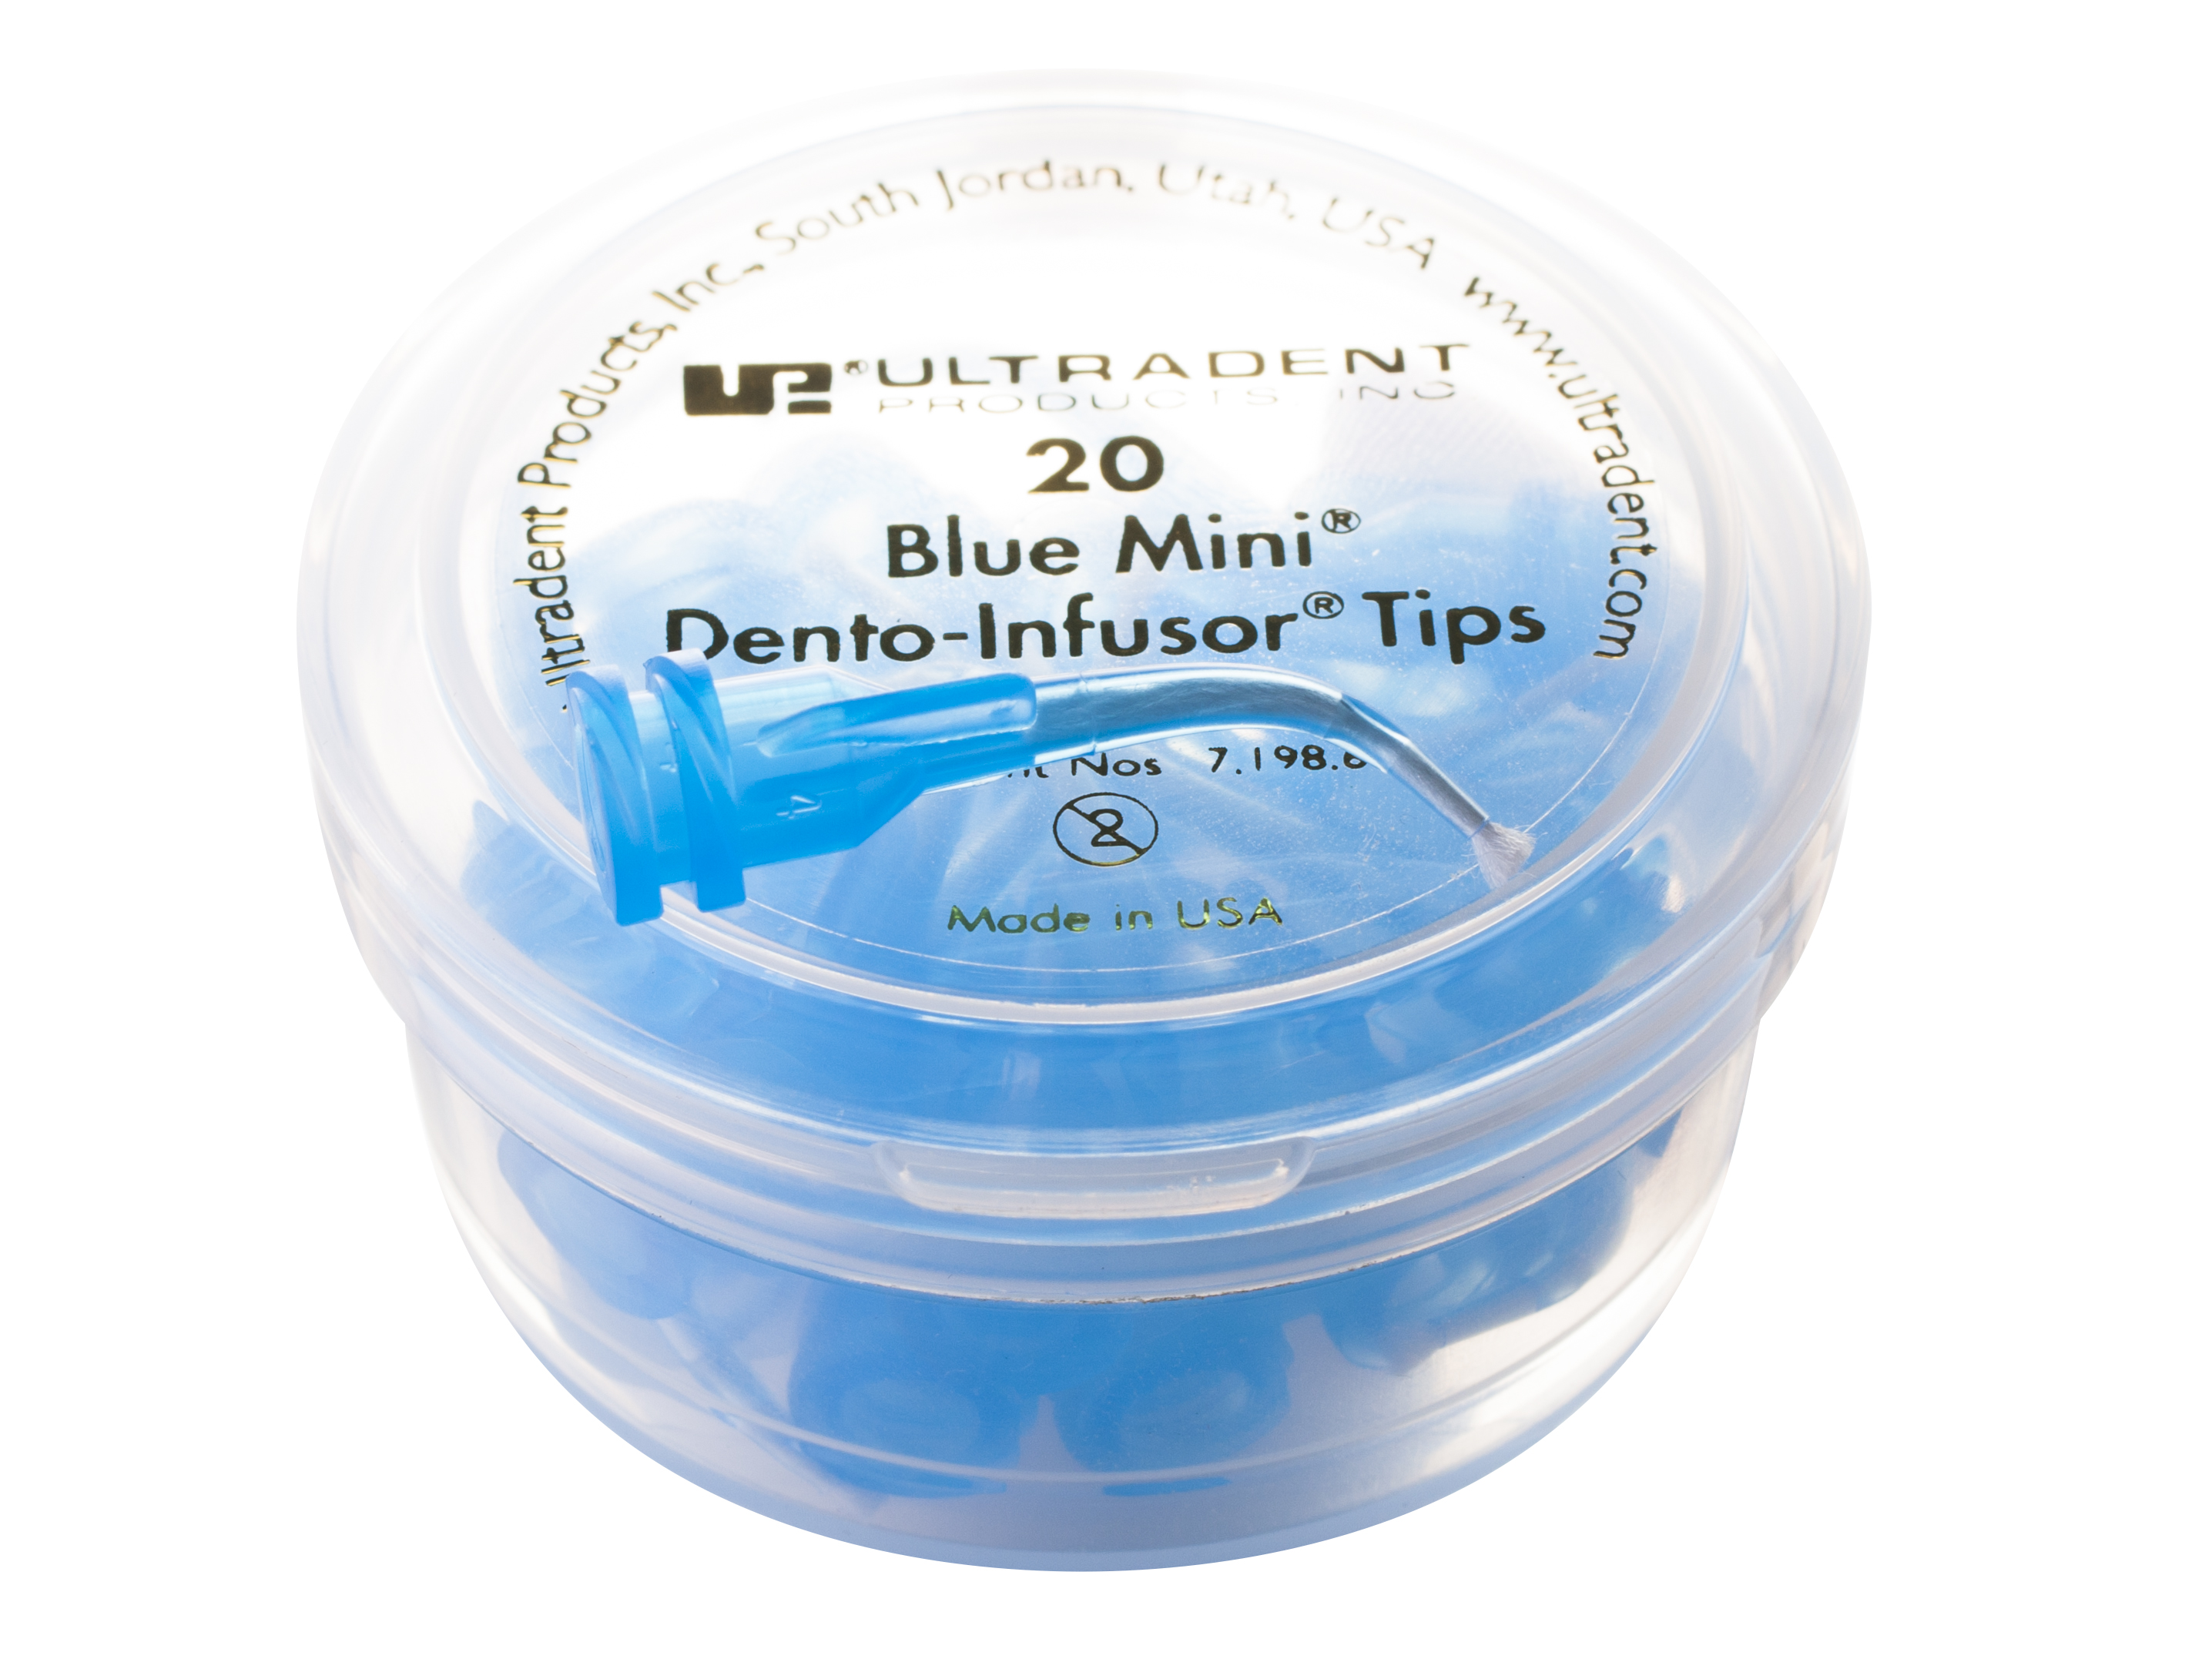 Blue Mini Dento-Infusor Tips